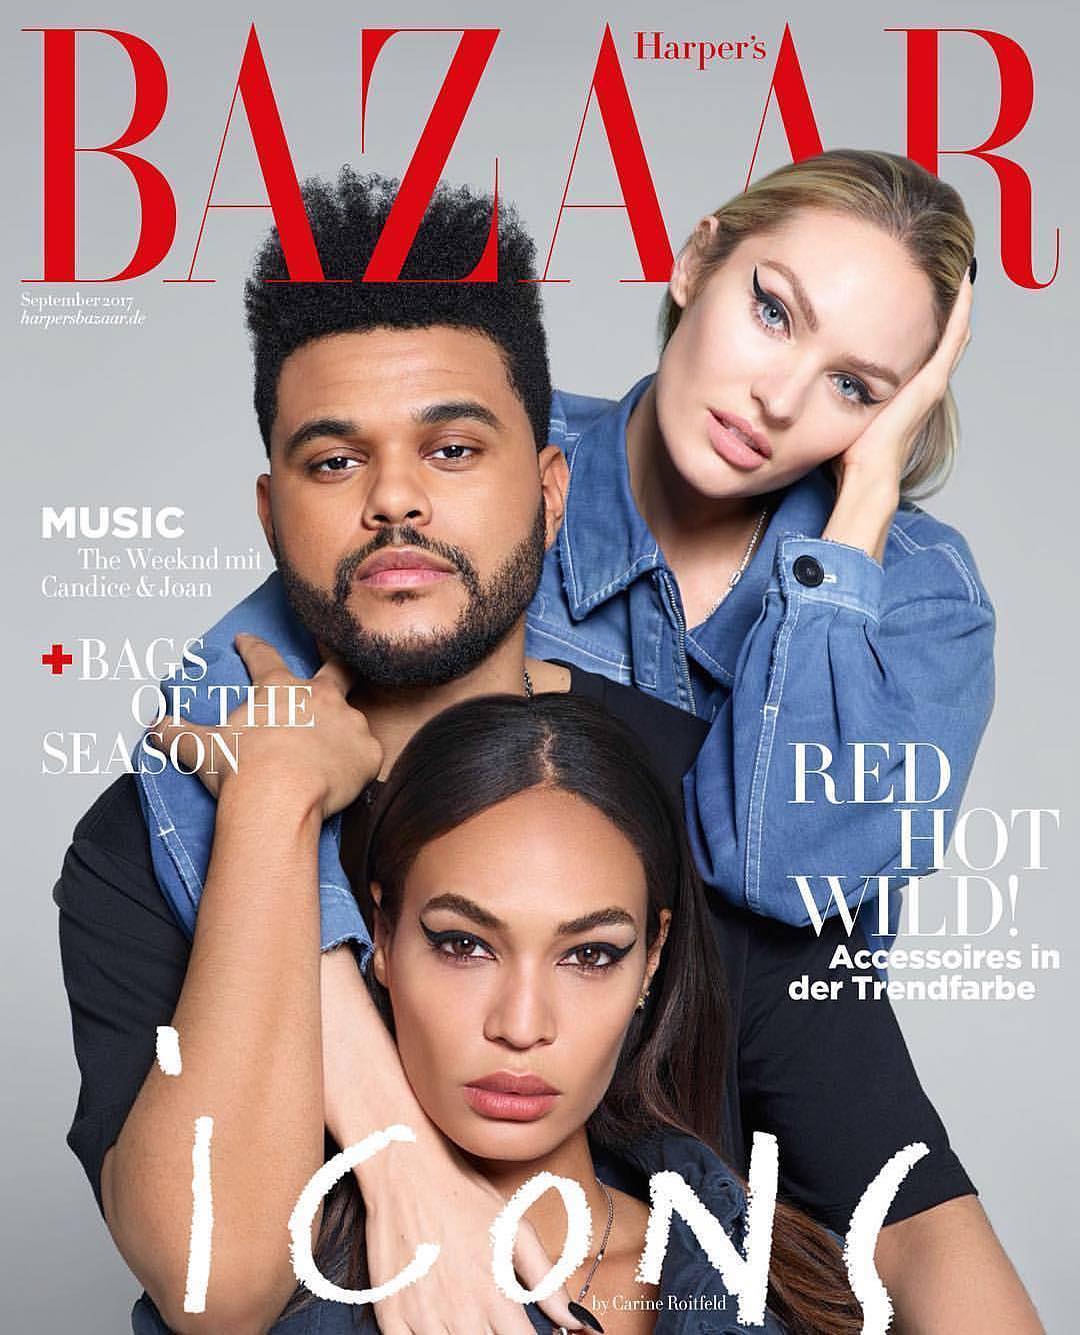 The Weeknd Courtney Love Harpers Bazaar 2017 Wallpapers